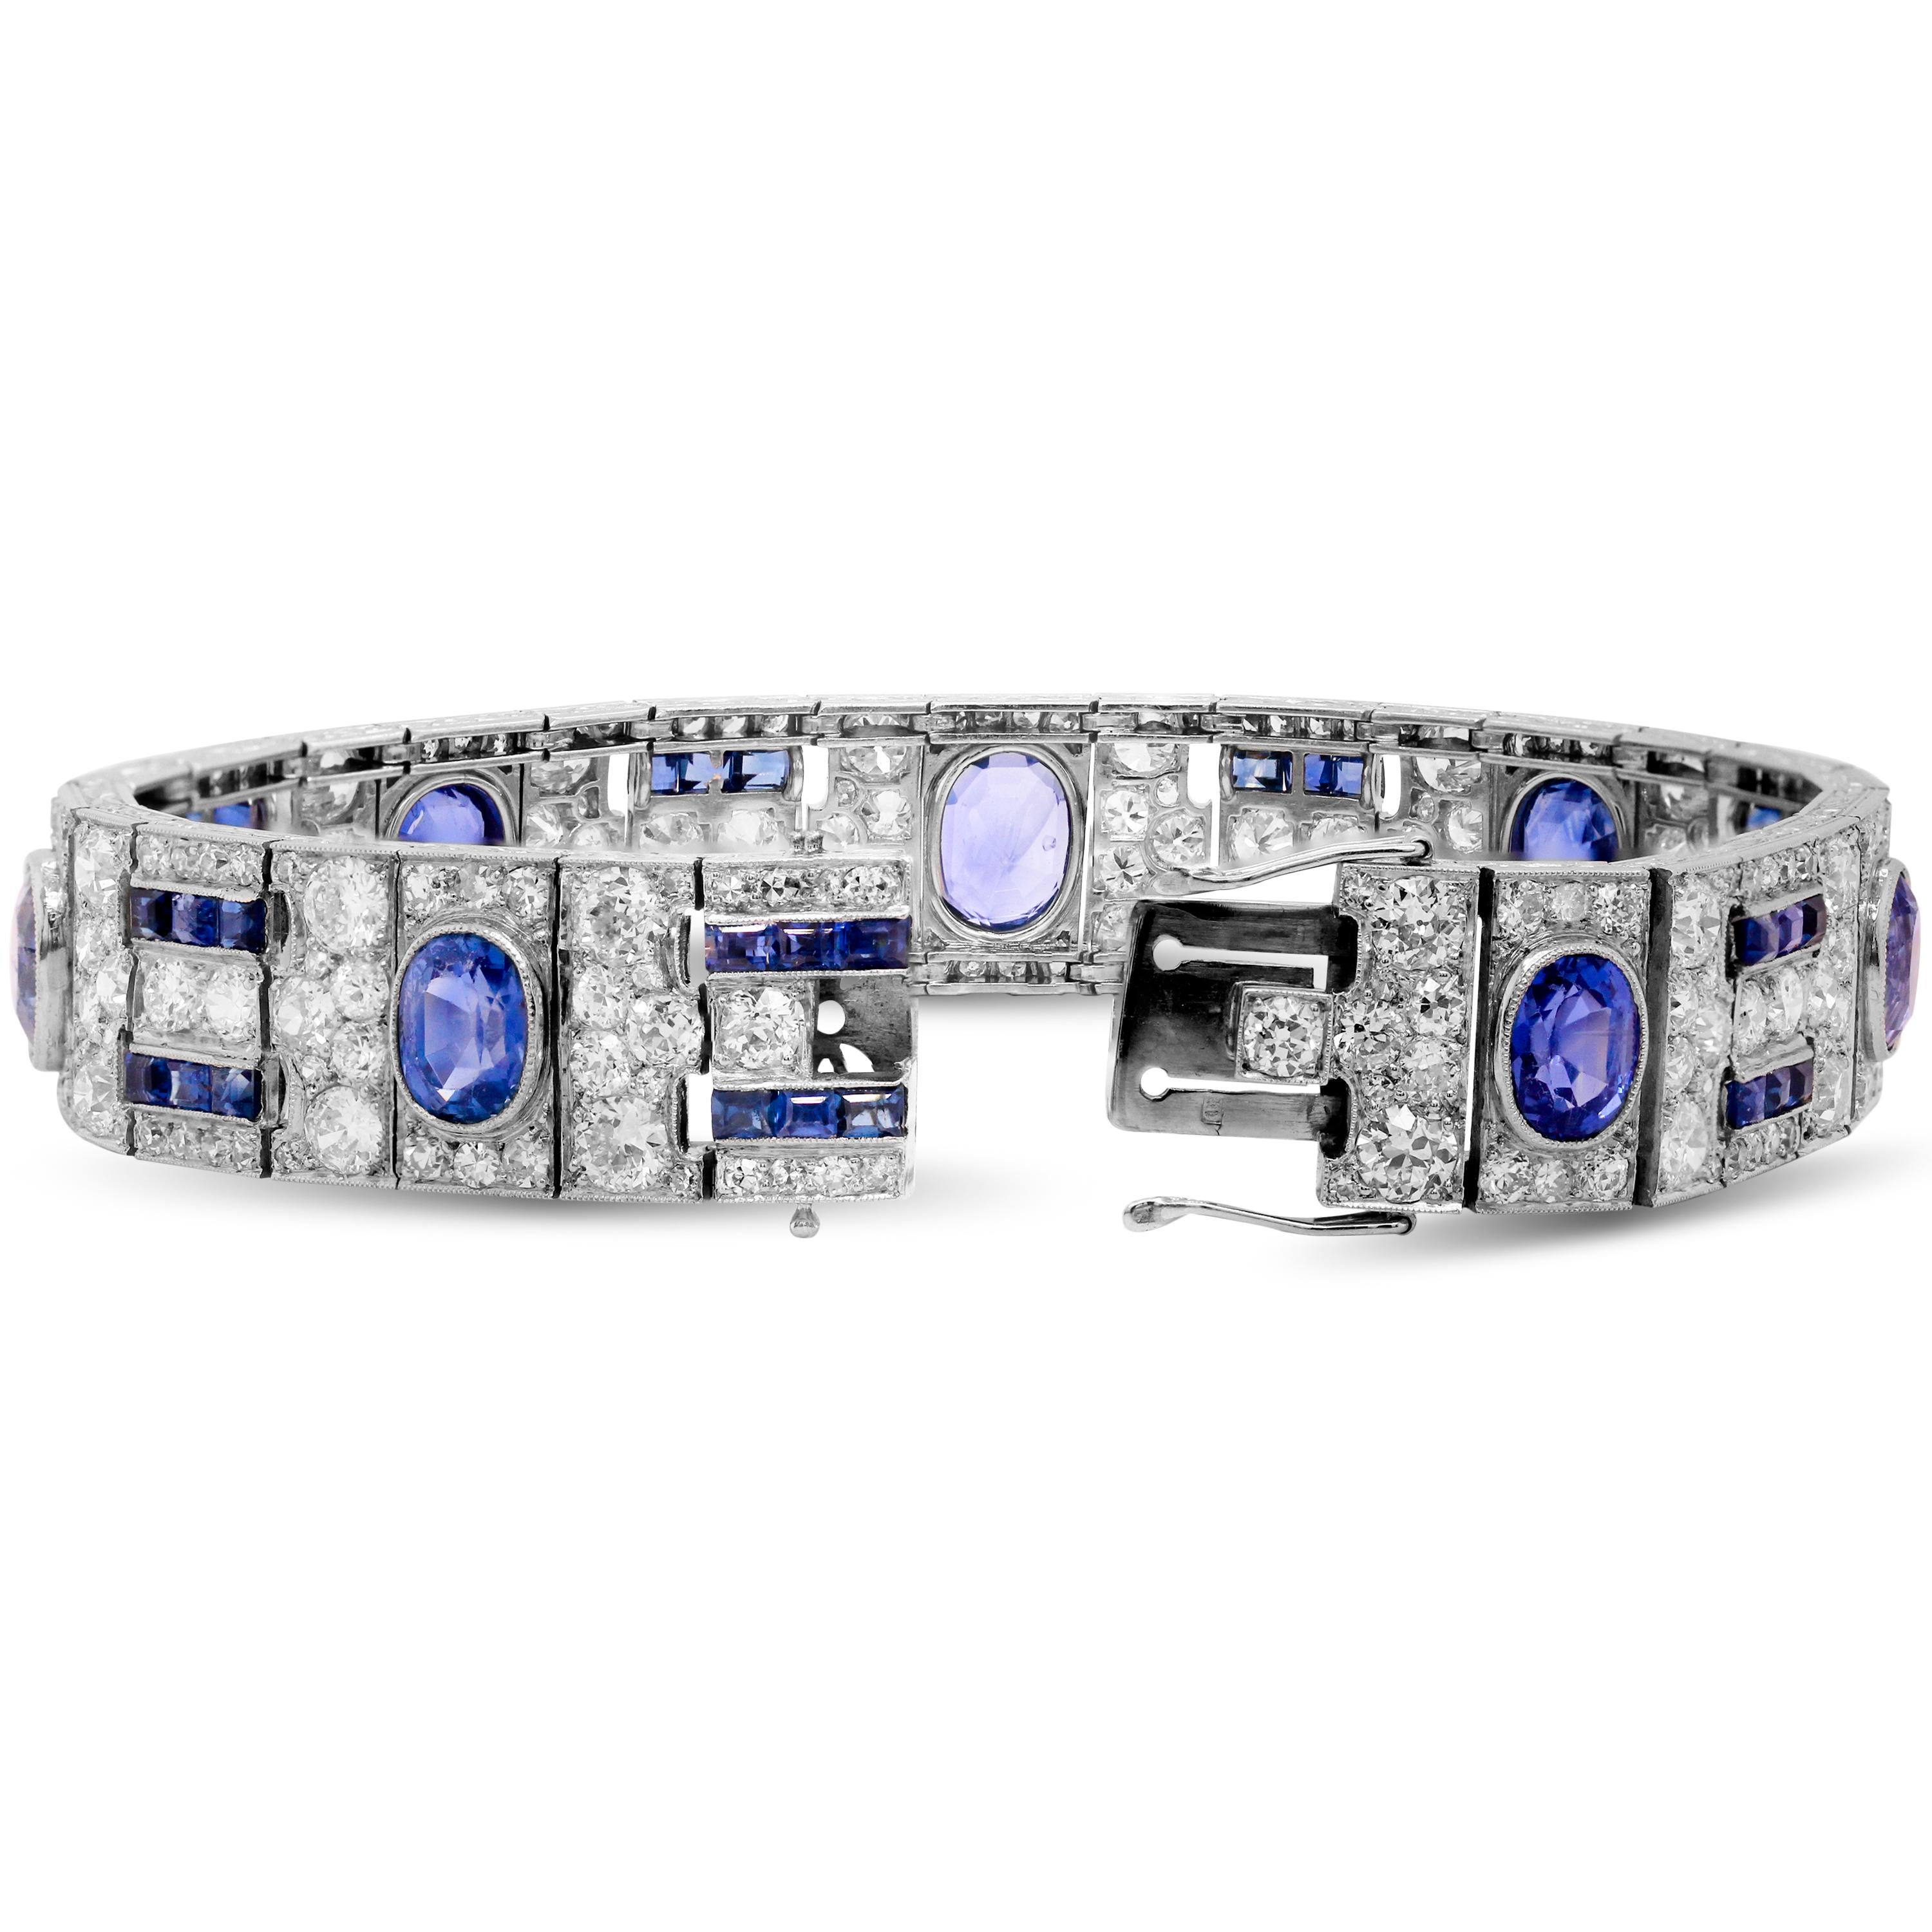 Oval Cut Oval and Princess Cut Blue Sapphires Diamonds 18 Karat Gold Bracelet